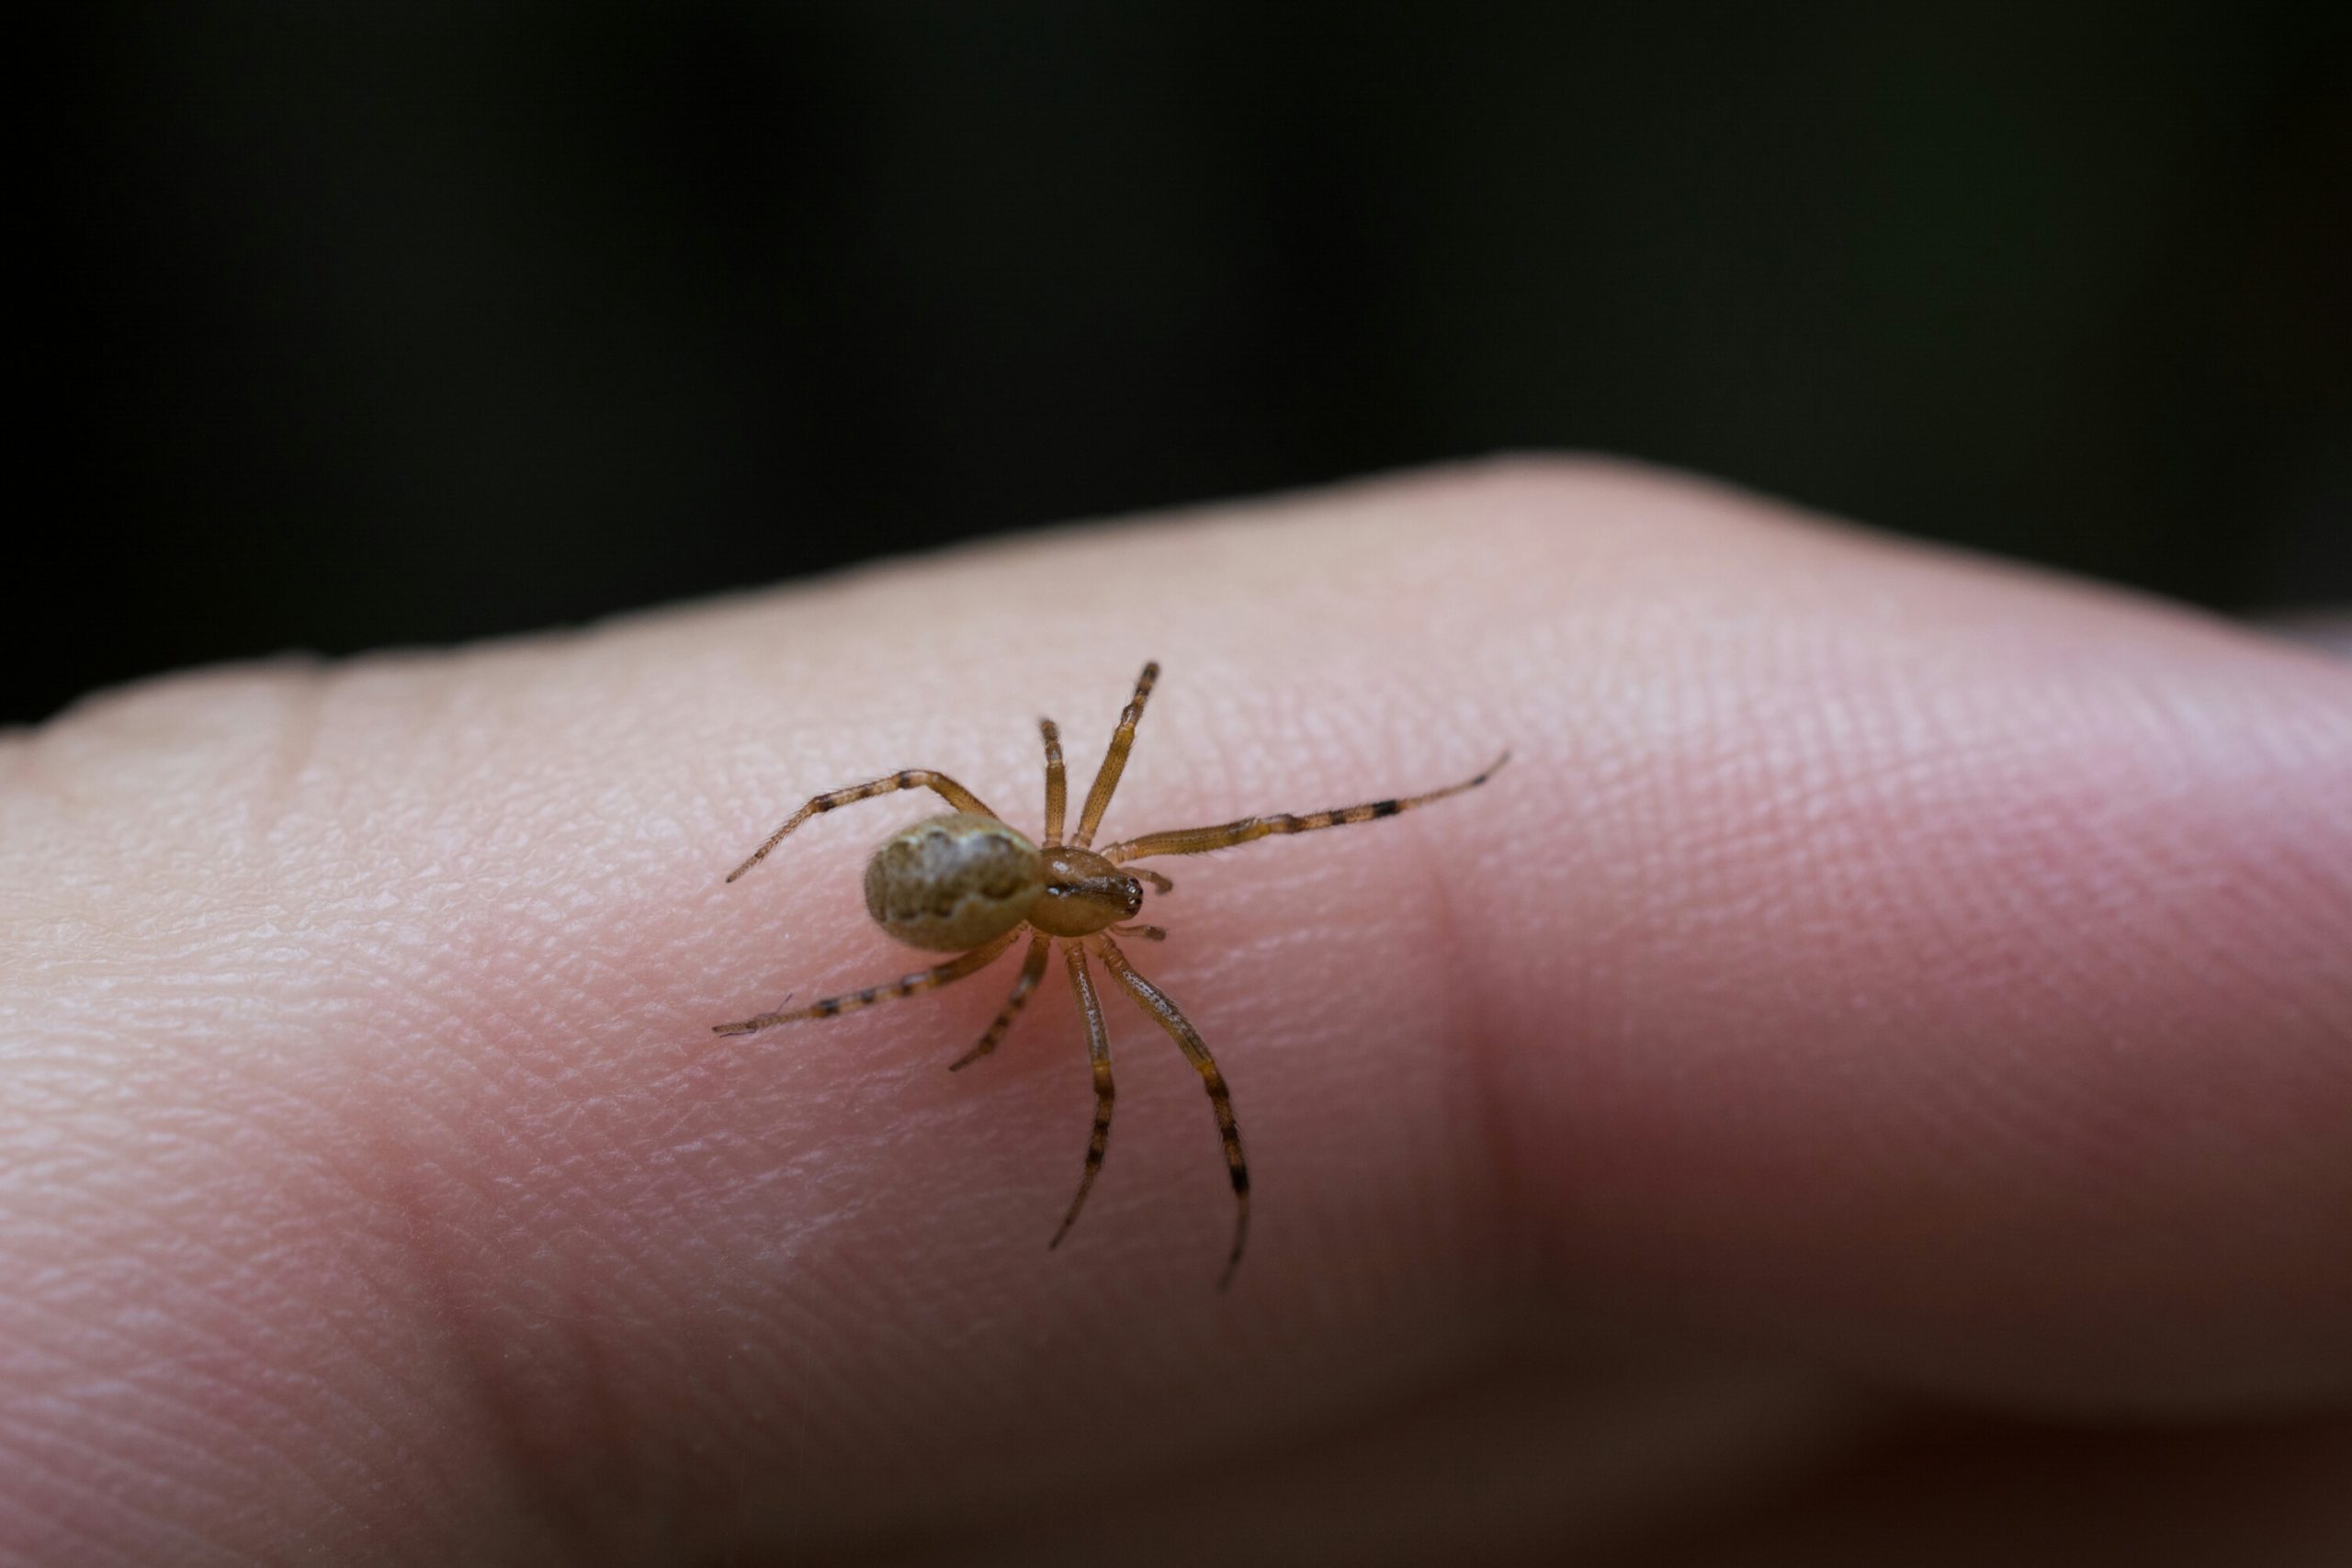 Baby Brown Recluse Spider Bite